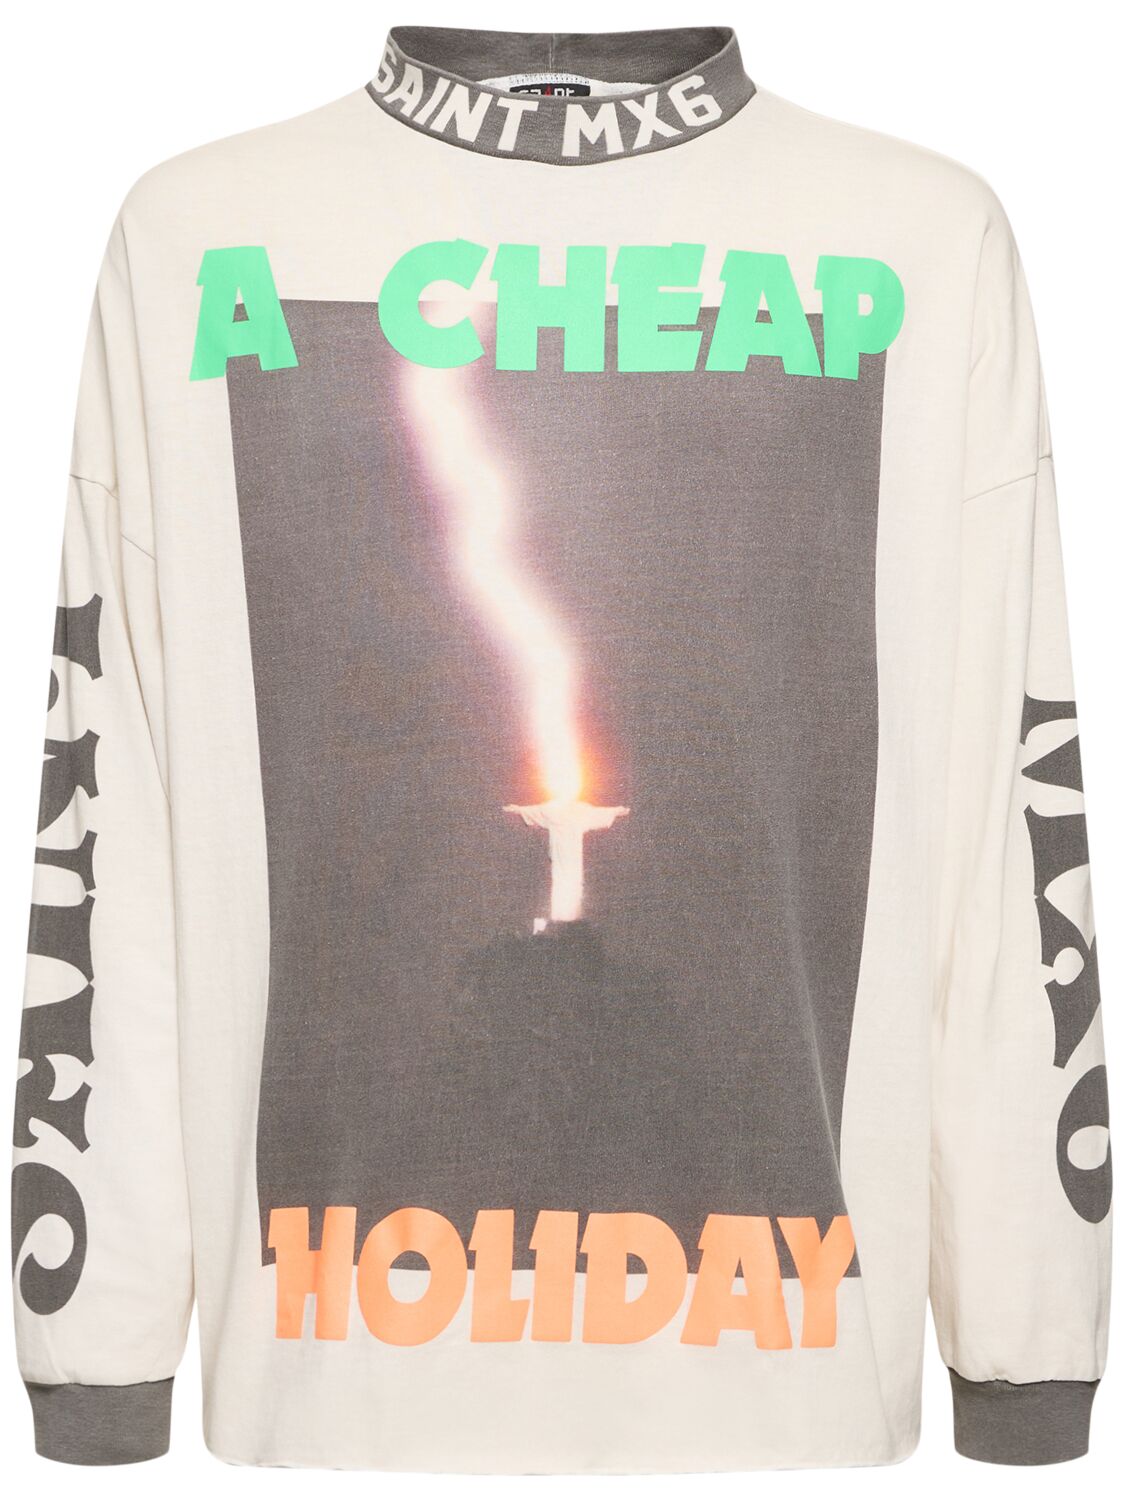 Image of Saint Mx6 Cheap Holiday Cotton T-shirt